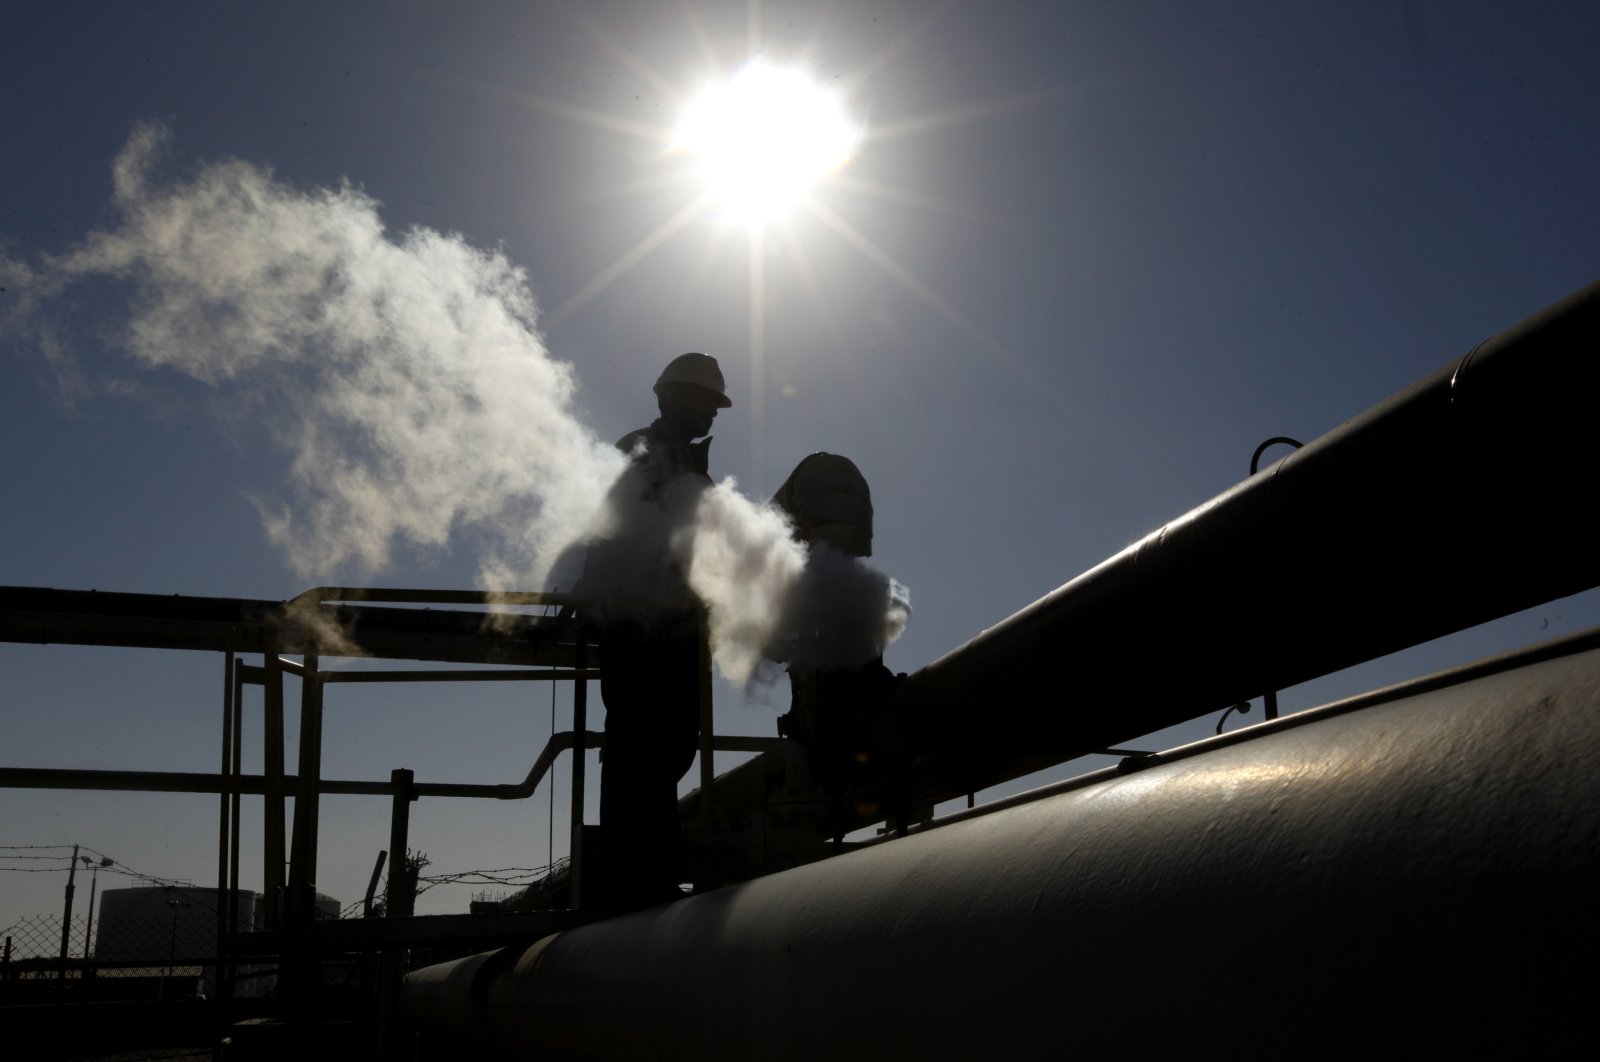 A Libyan oil worker works at a refinery inside the Brega oil complex in Brega, eastern Libya, Feb. 26, 2011. (AP Photo)